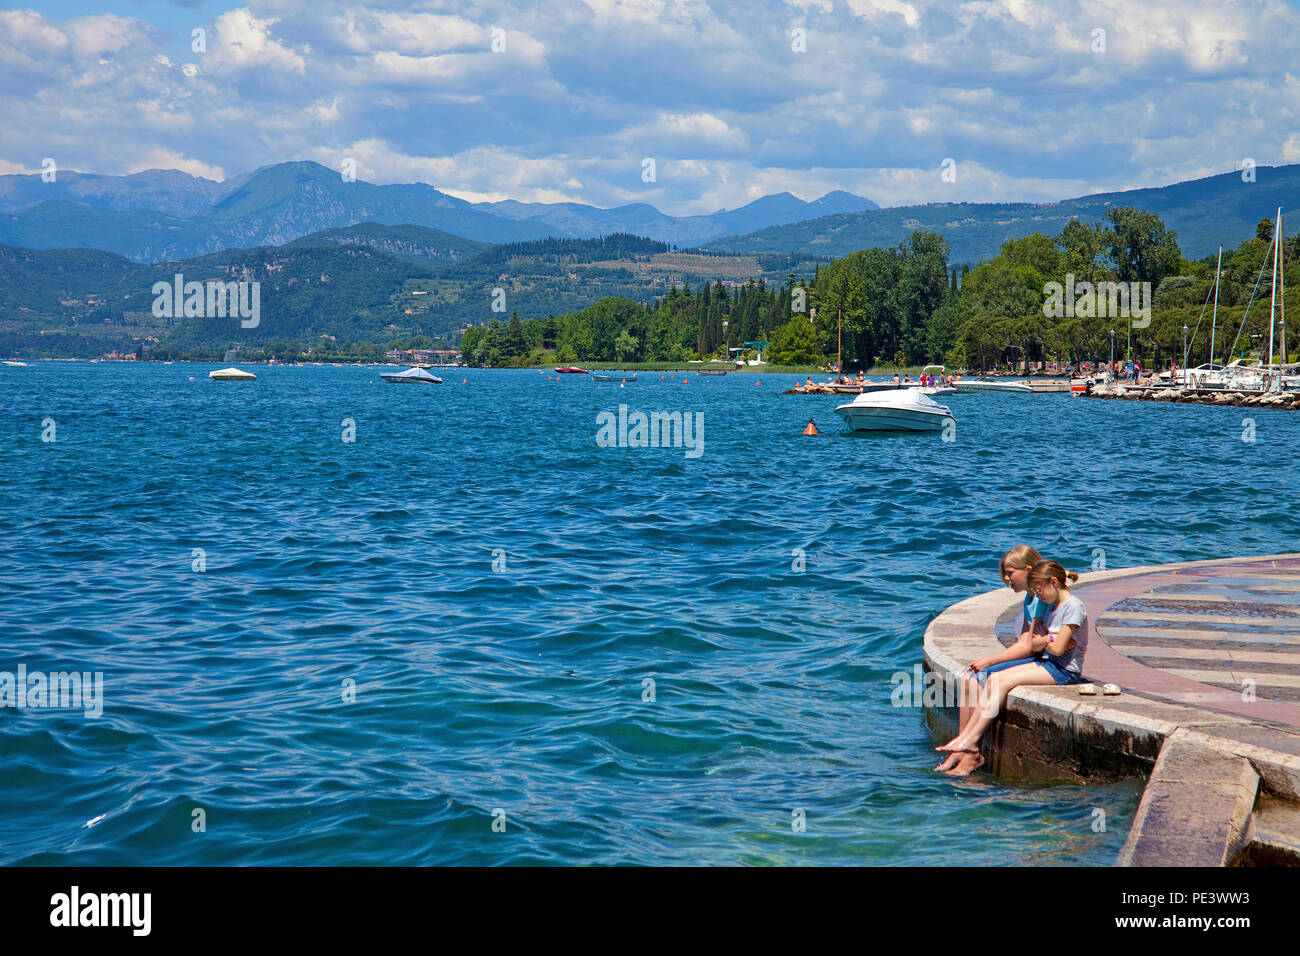 Two young girls sitting at lake promenade of Lazise, Garda lake, province Verona, Italy Stock Photo